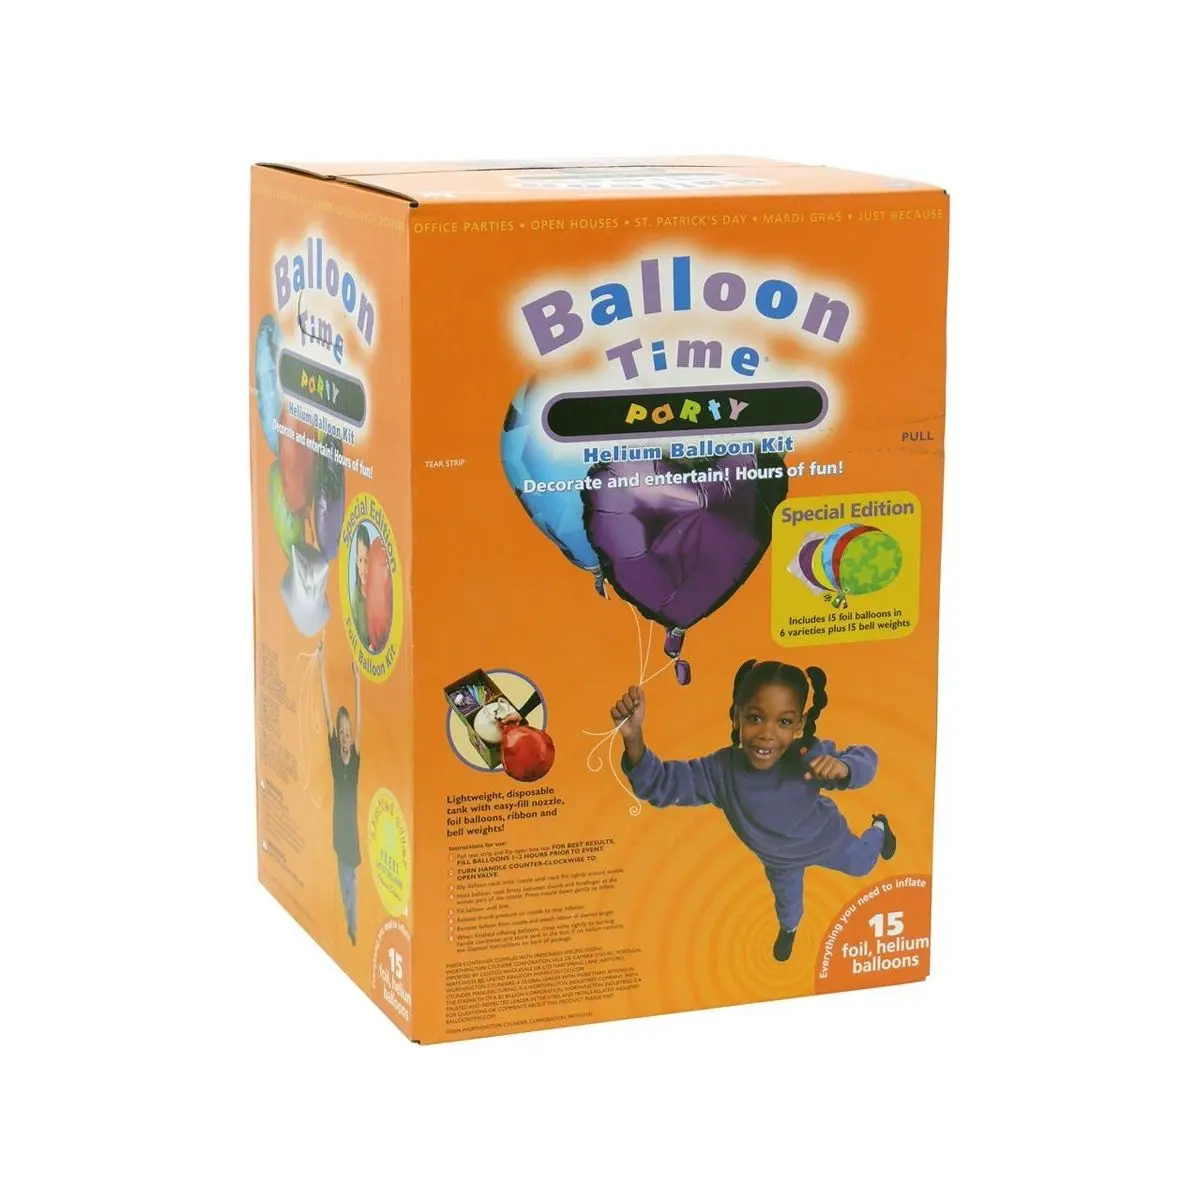 Balónová súprava s héliom na párty